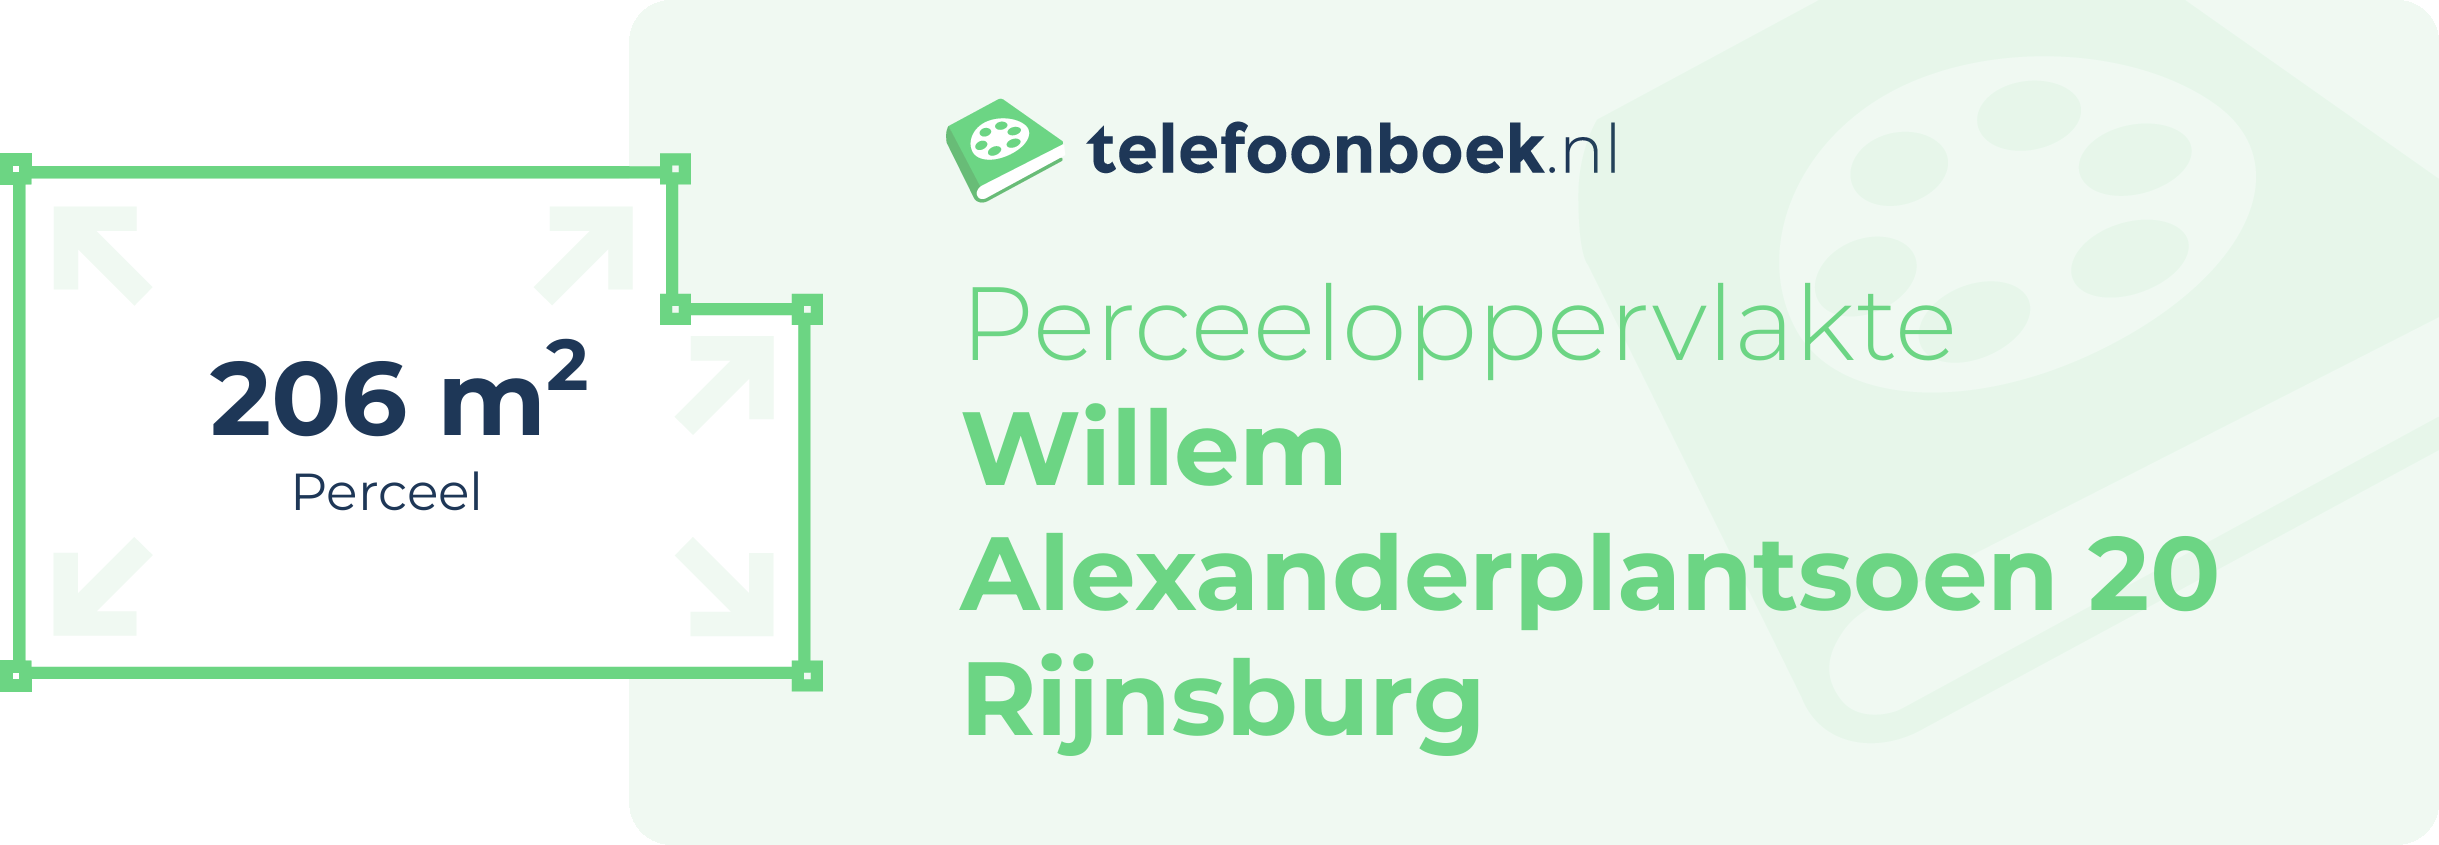 Perceeloppervlakte Willem Alexanderplantsoen 20 Rijnsburg